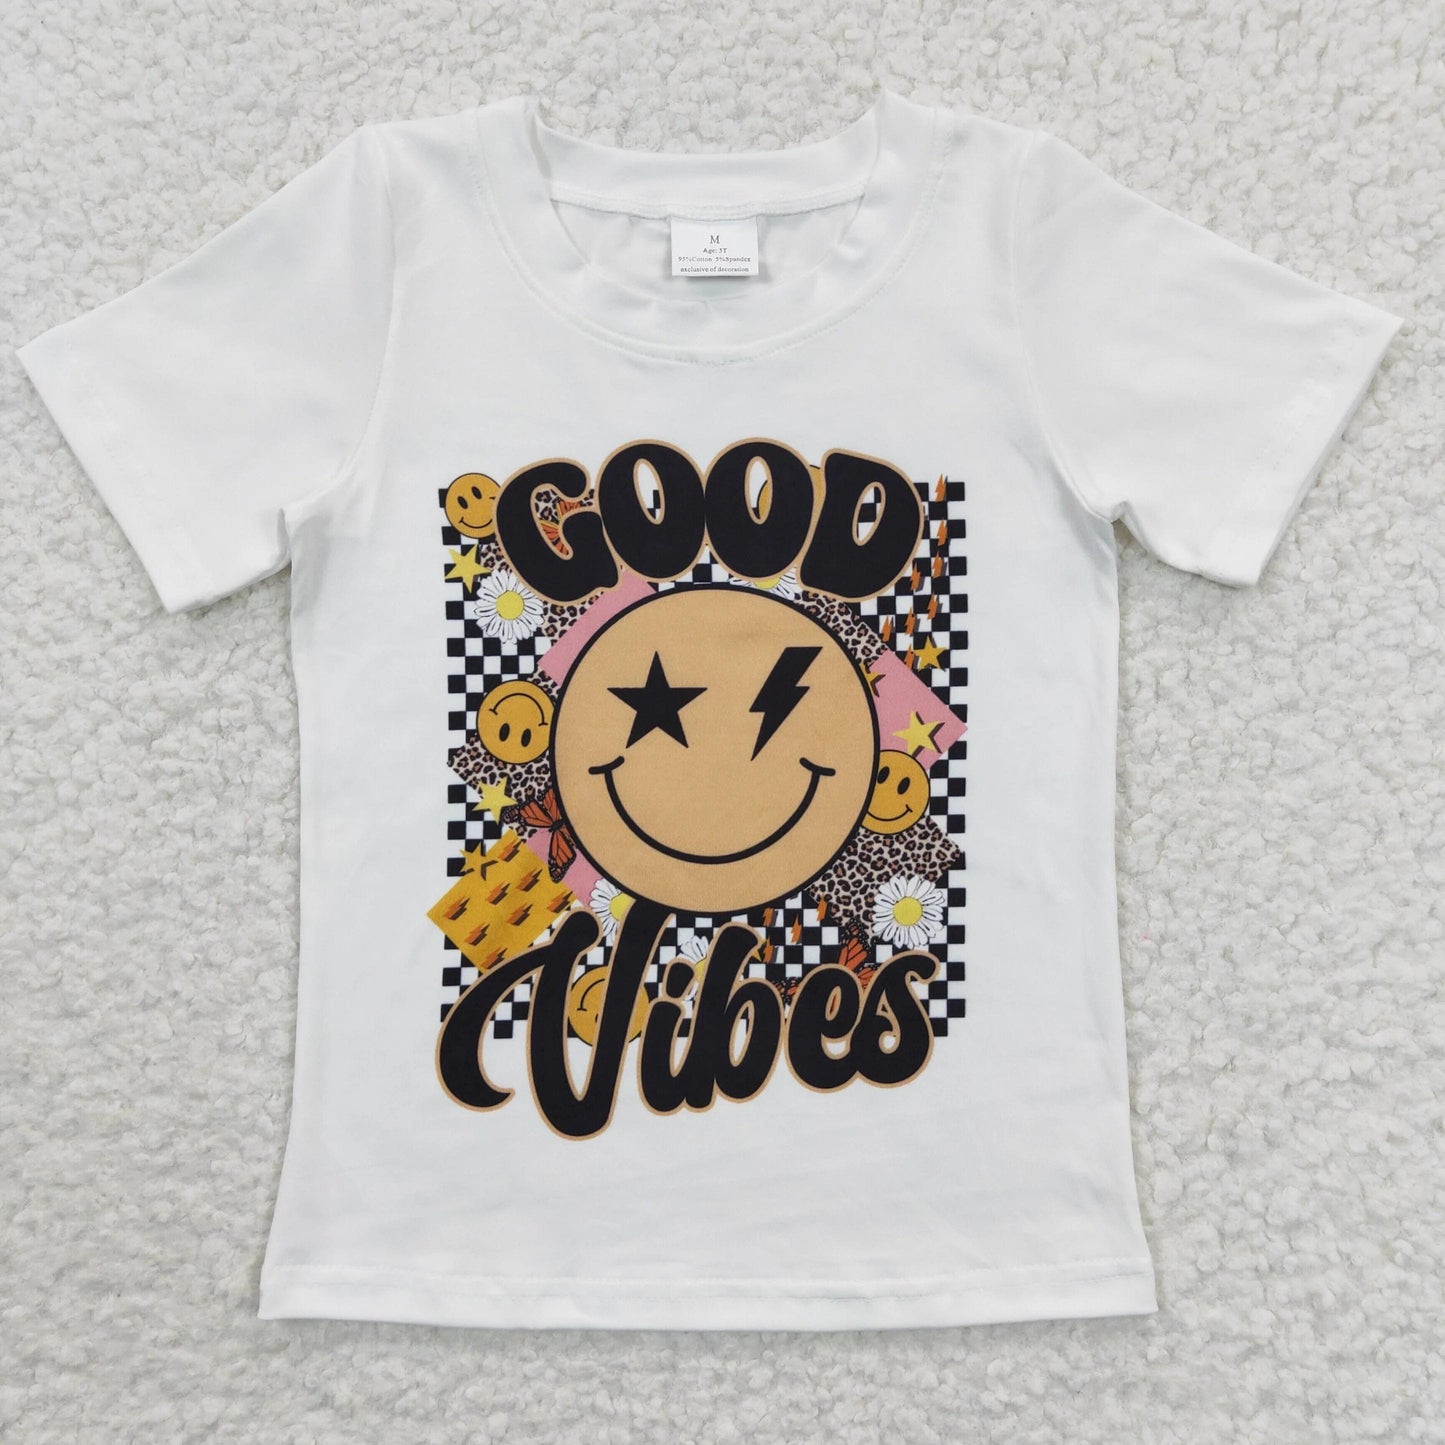 PREORDER - Groovy Good Vibes Shirt (3/6M - 14/16)